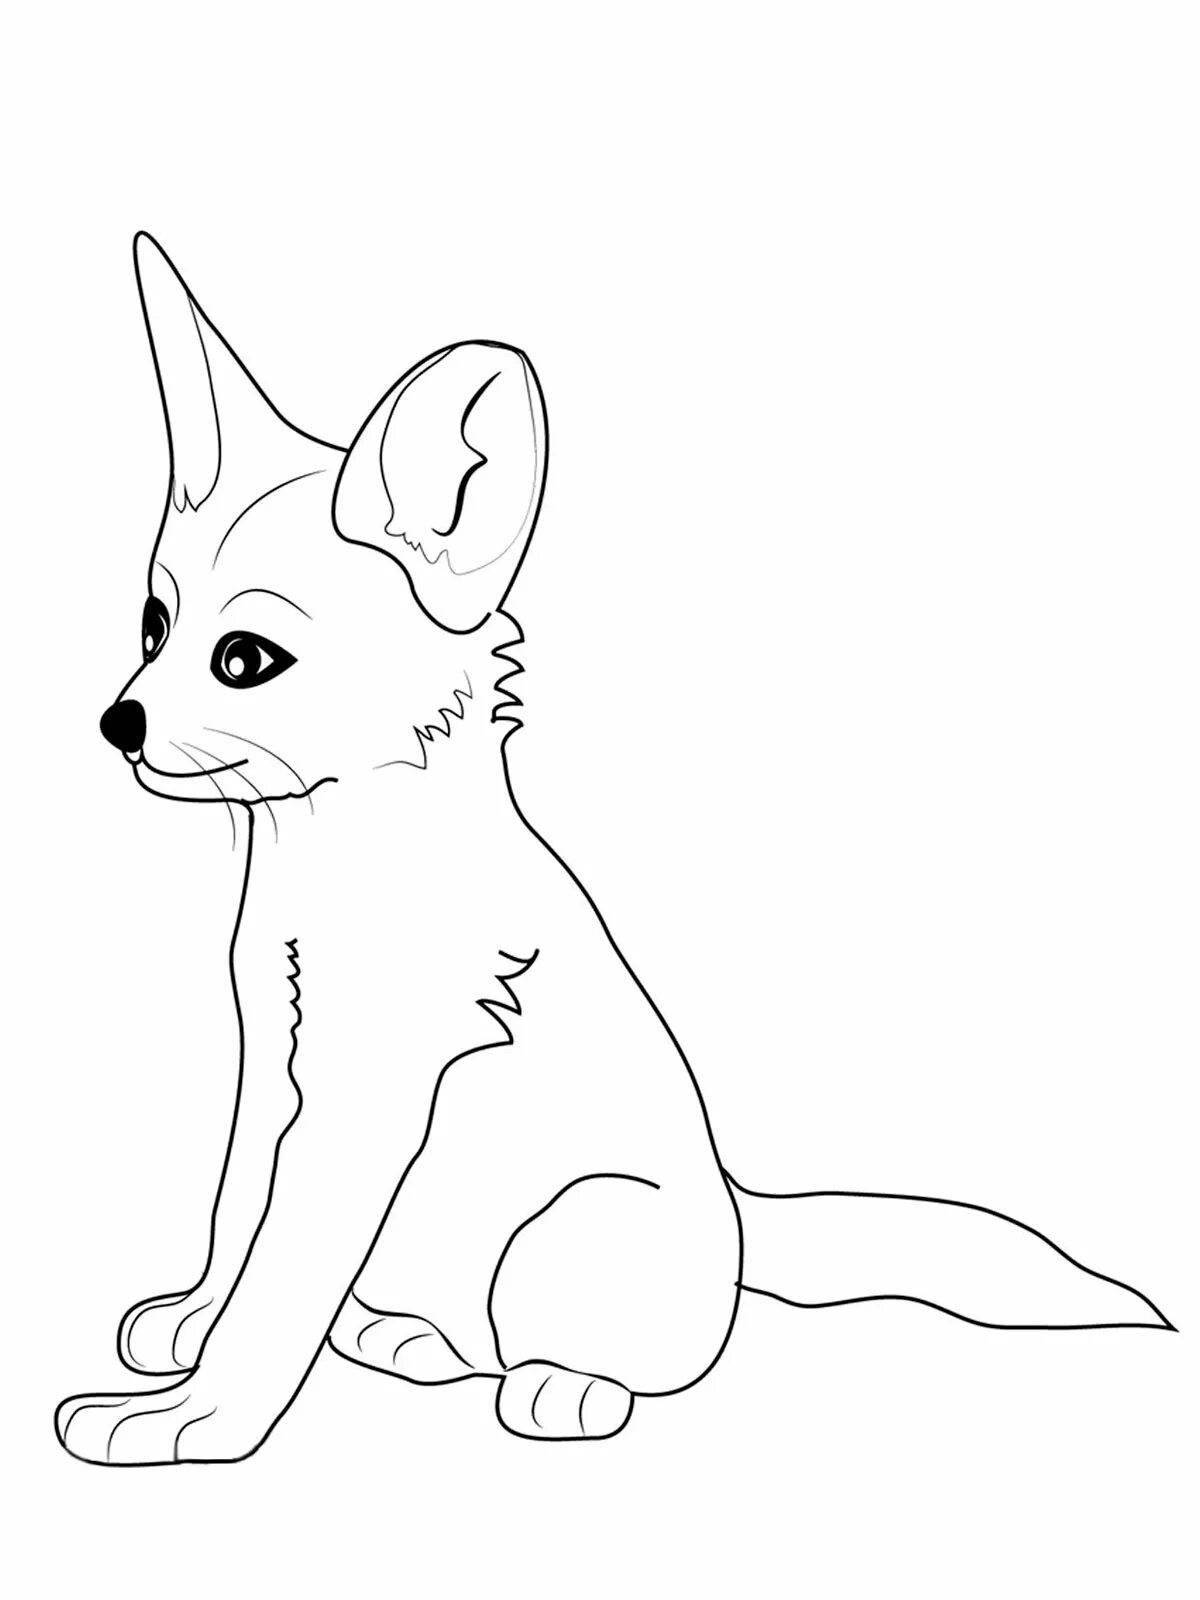 Shiny fox coloring